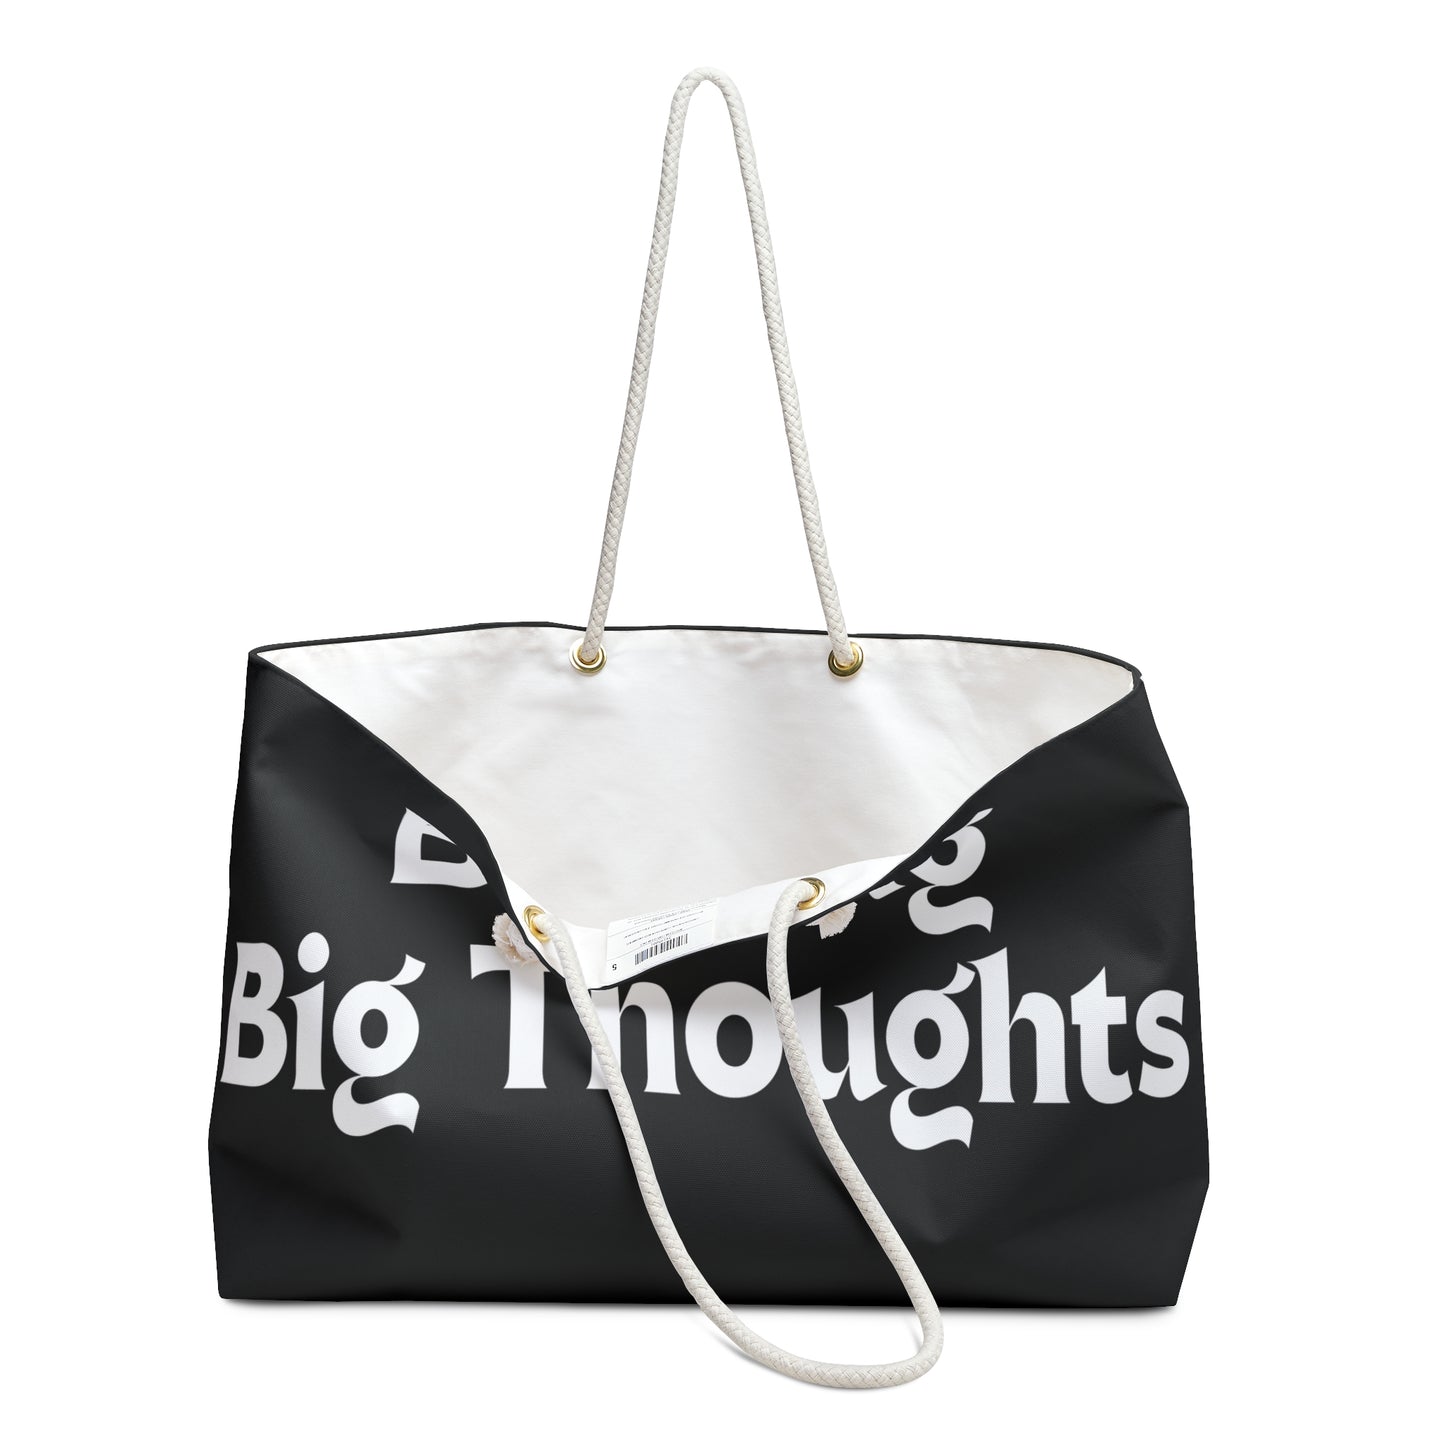 Artemis & Athena "Big Bag, Big Thoughts" Weekender Bag in Black